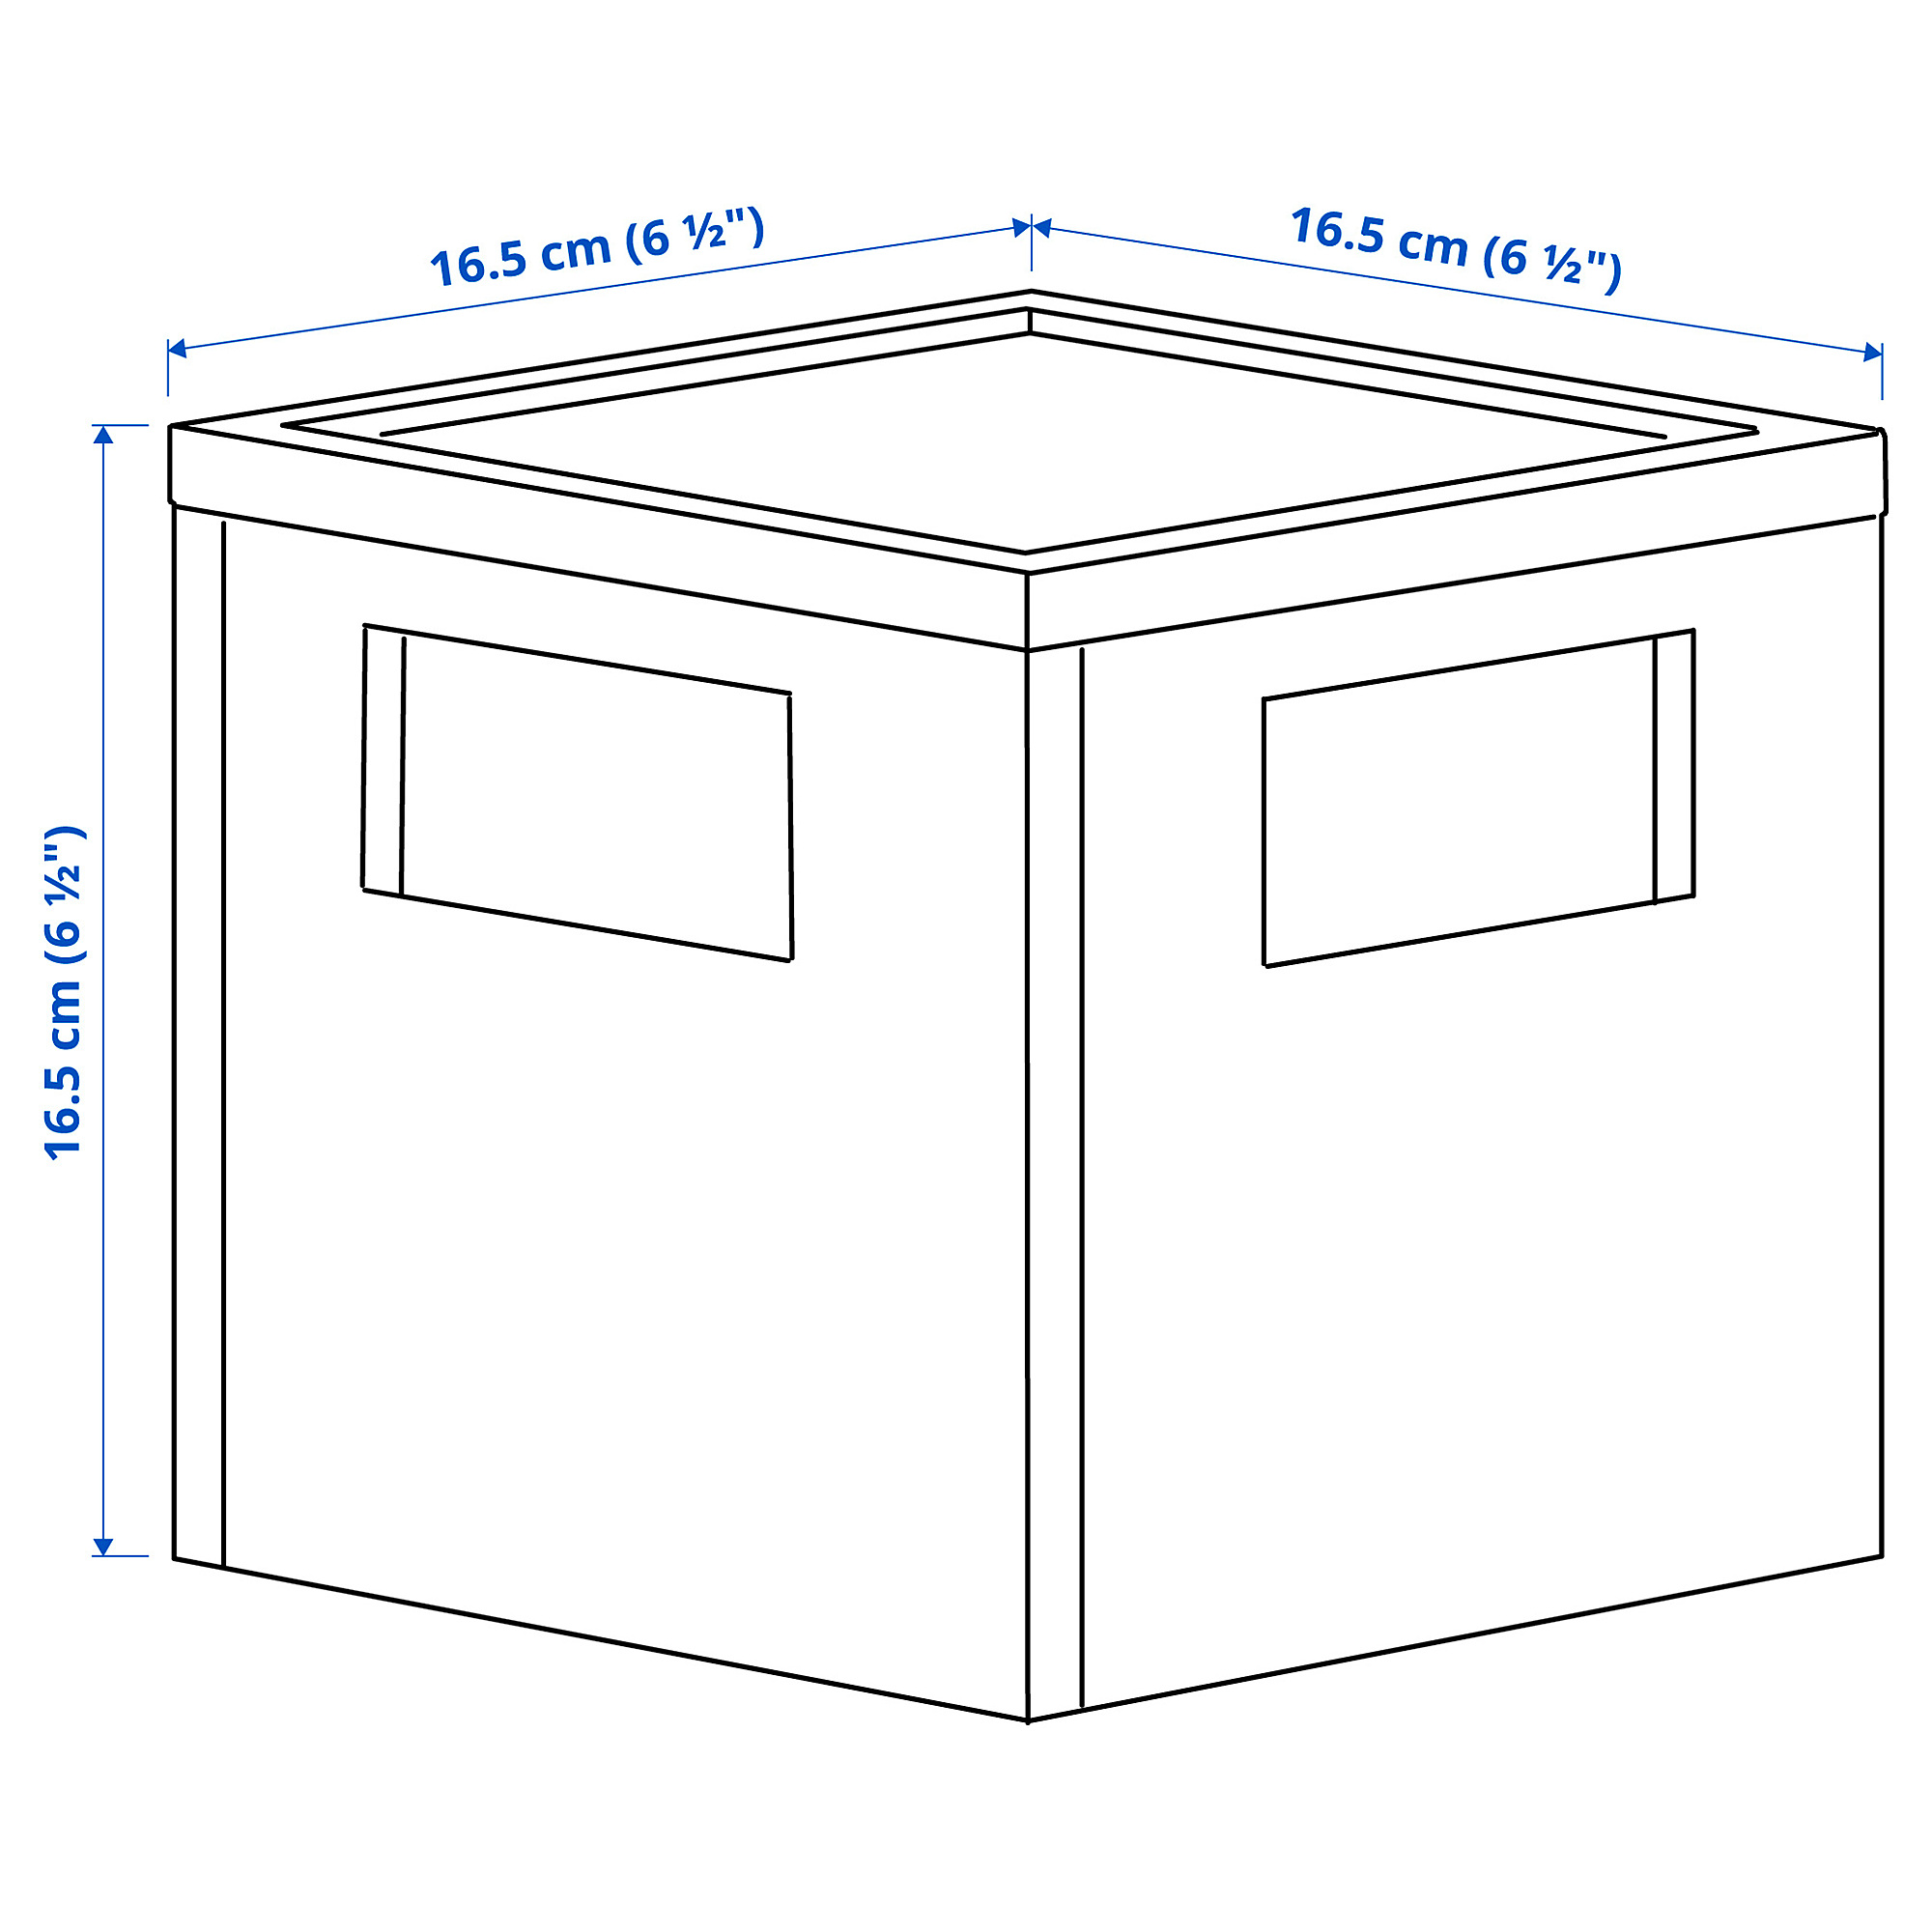 PANSARTAX storage box with lid